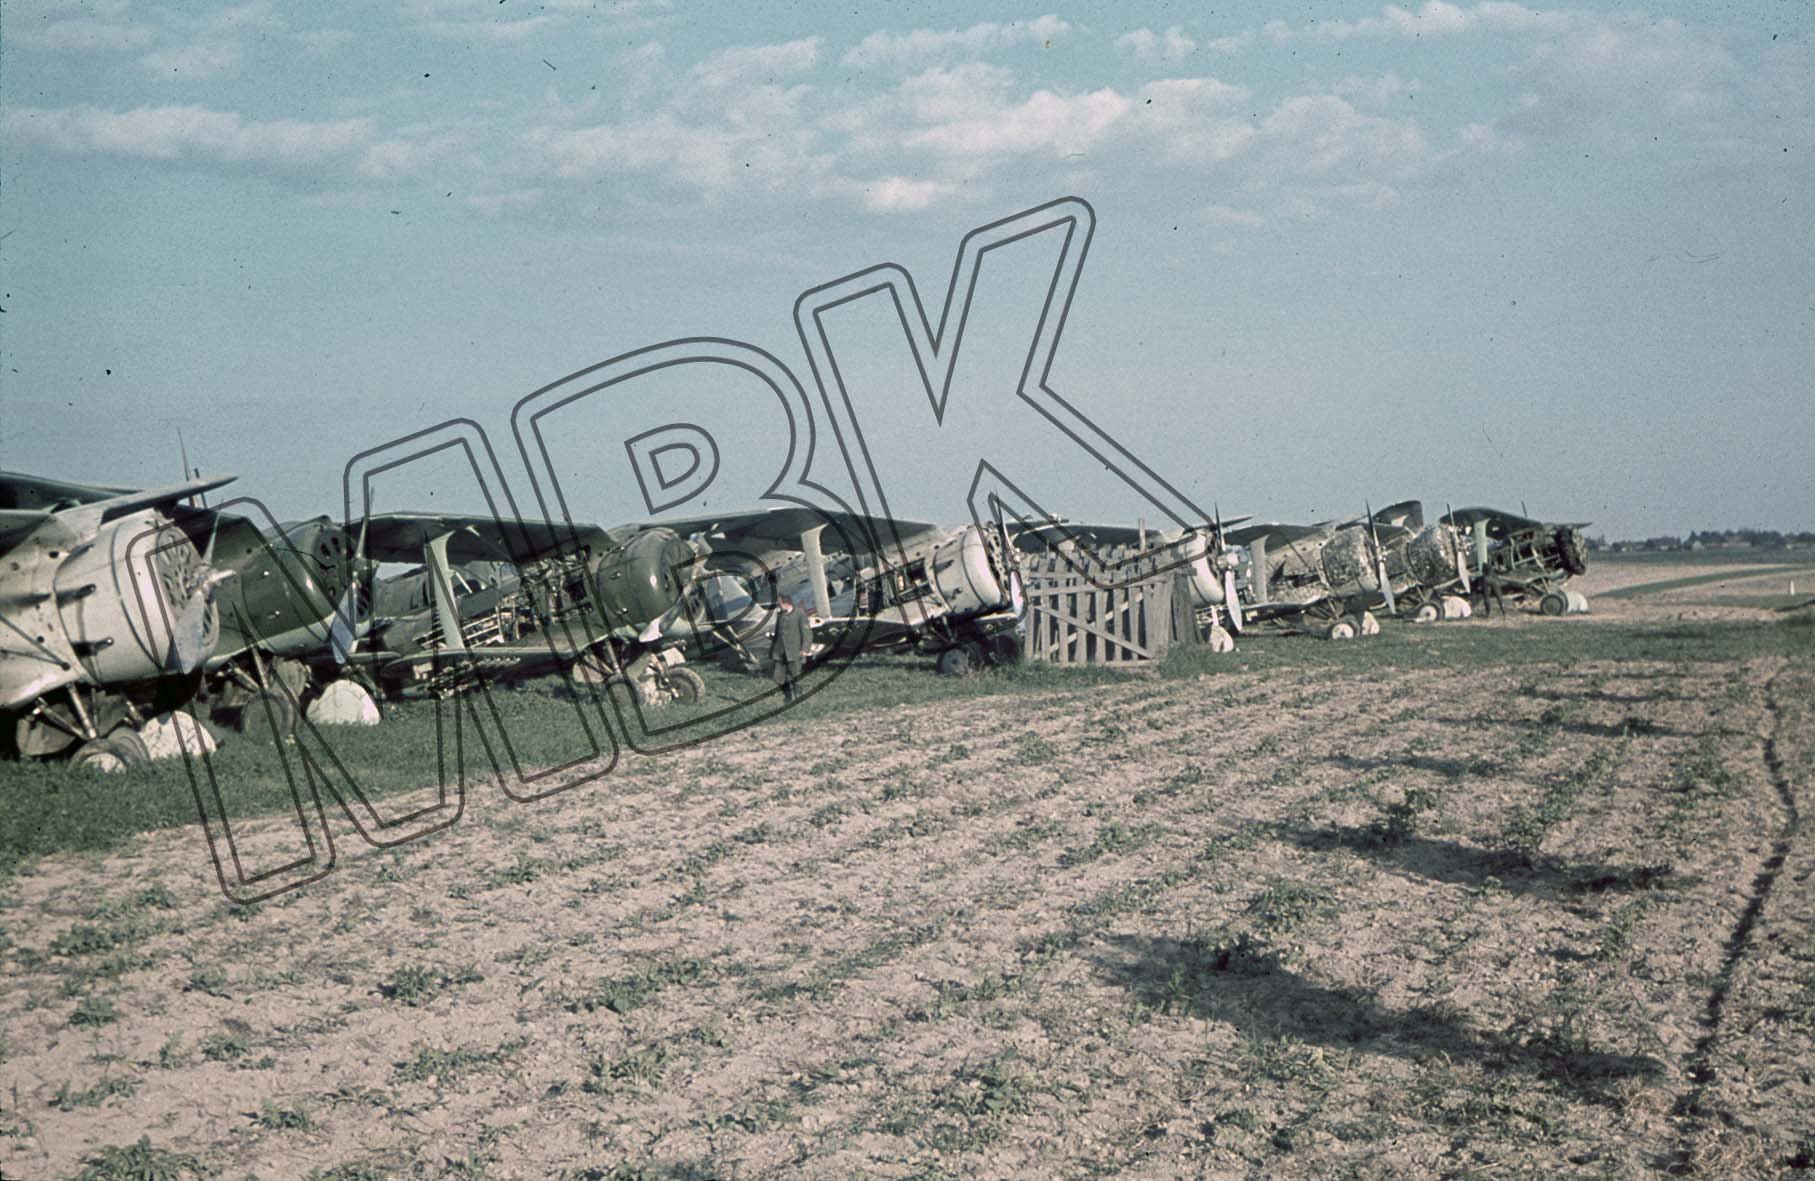 Fotografie: Zerstörte sowjetische Flugzeuge, bei Minsk, 10. Juli 1941 (Museum Berlin-Karlshorst RR-P)